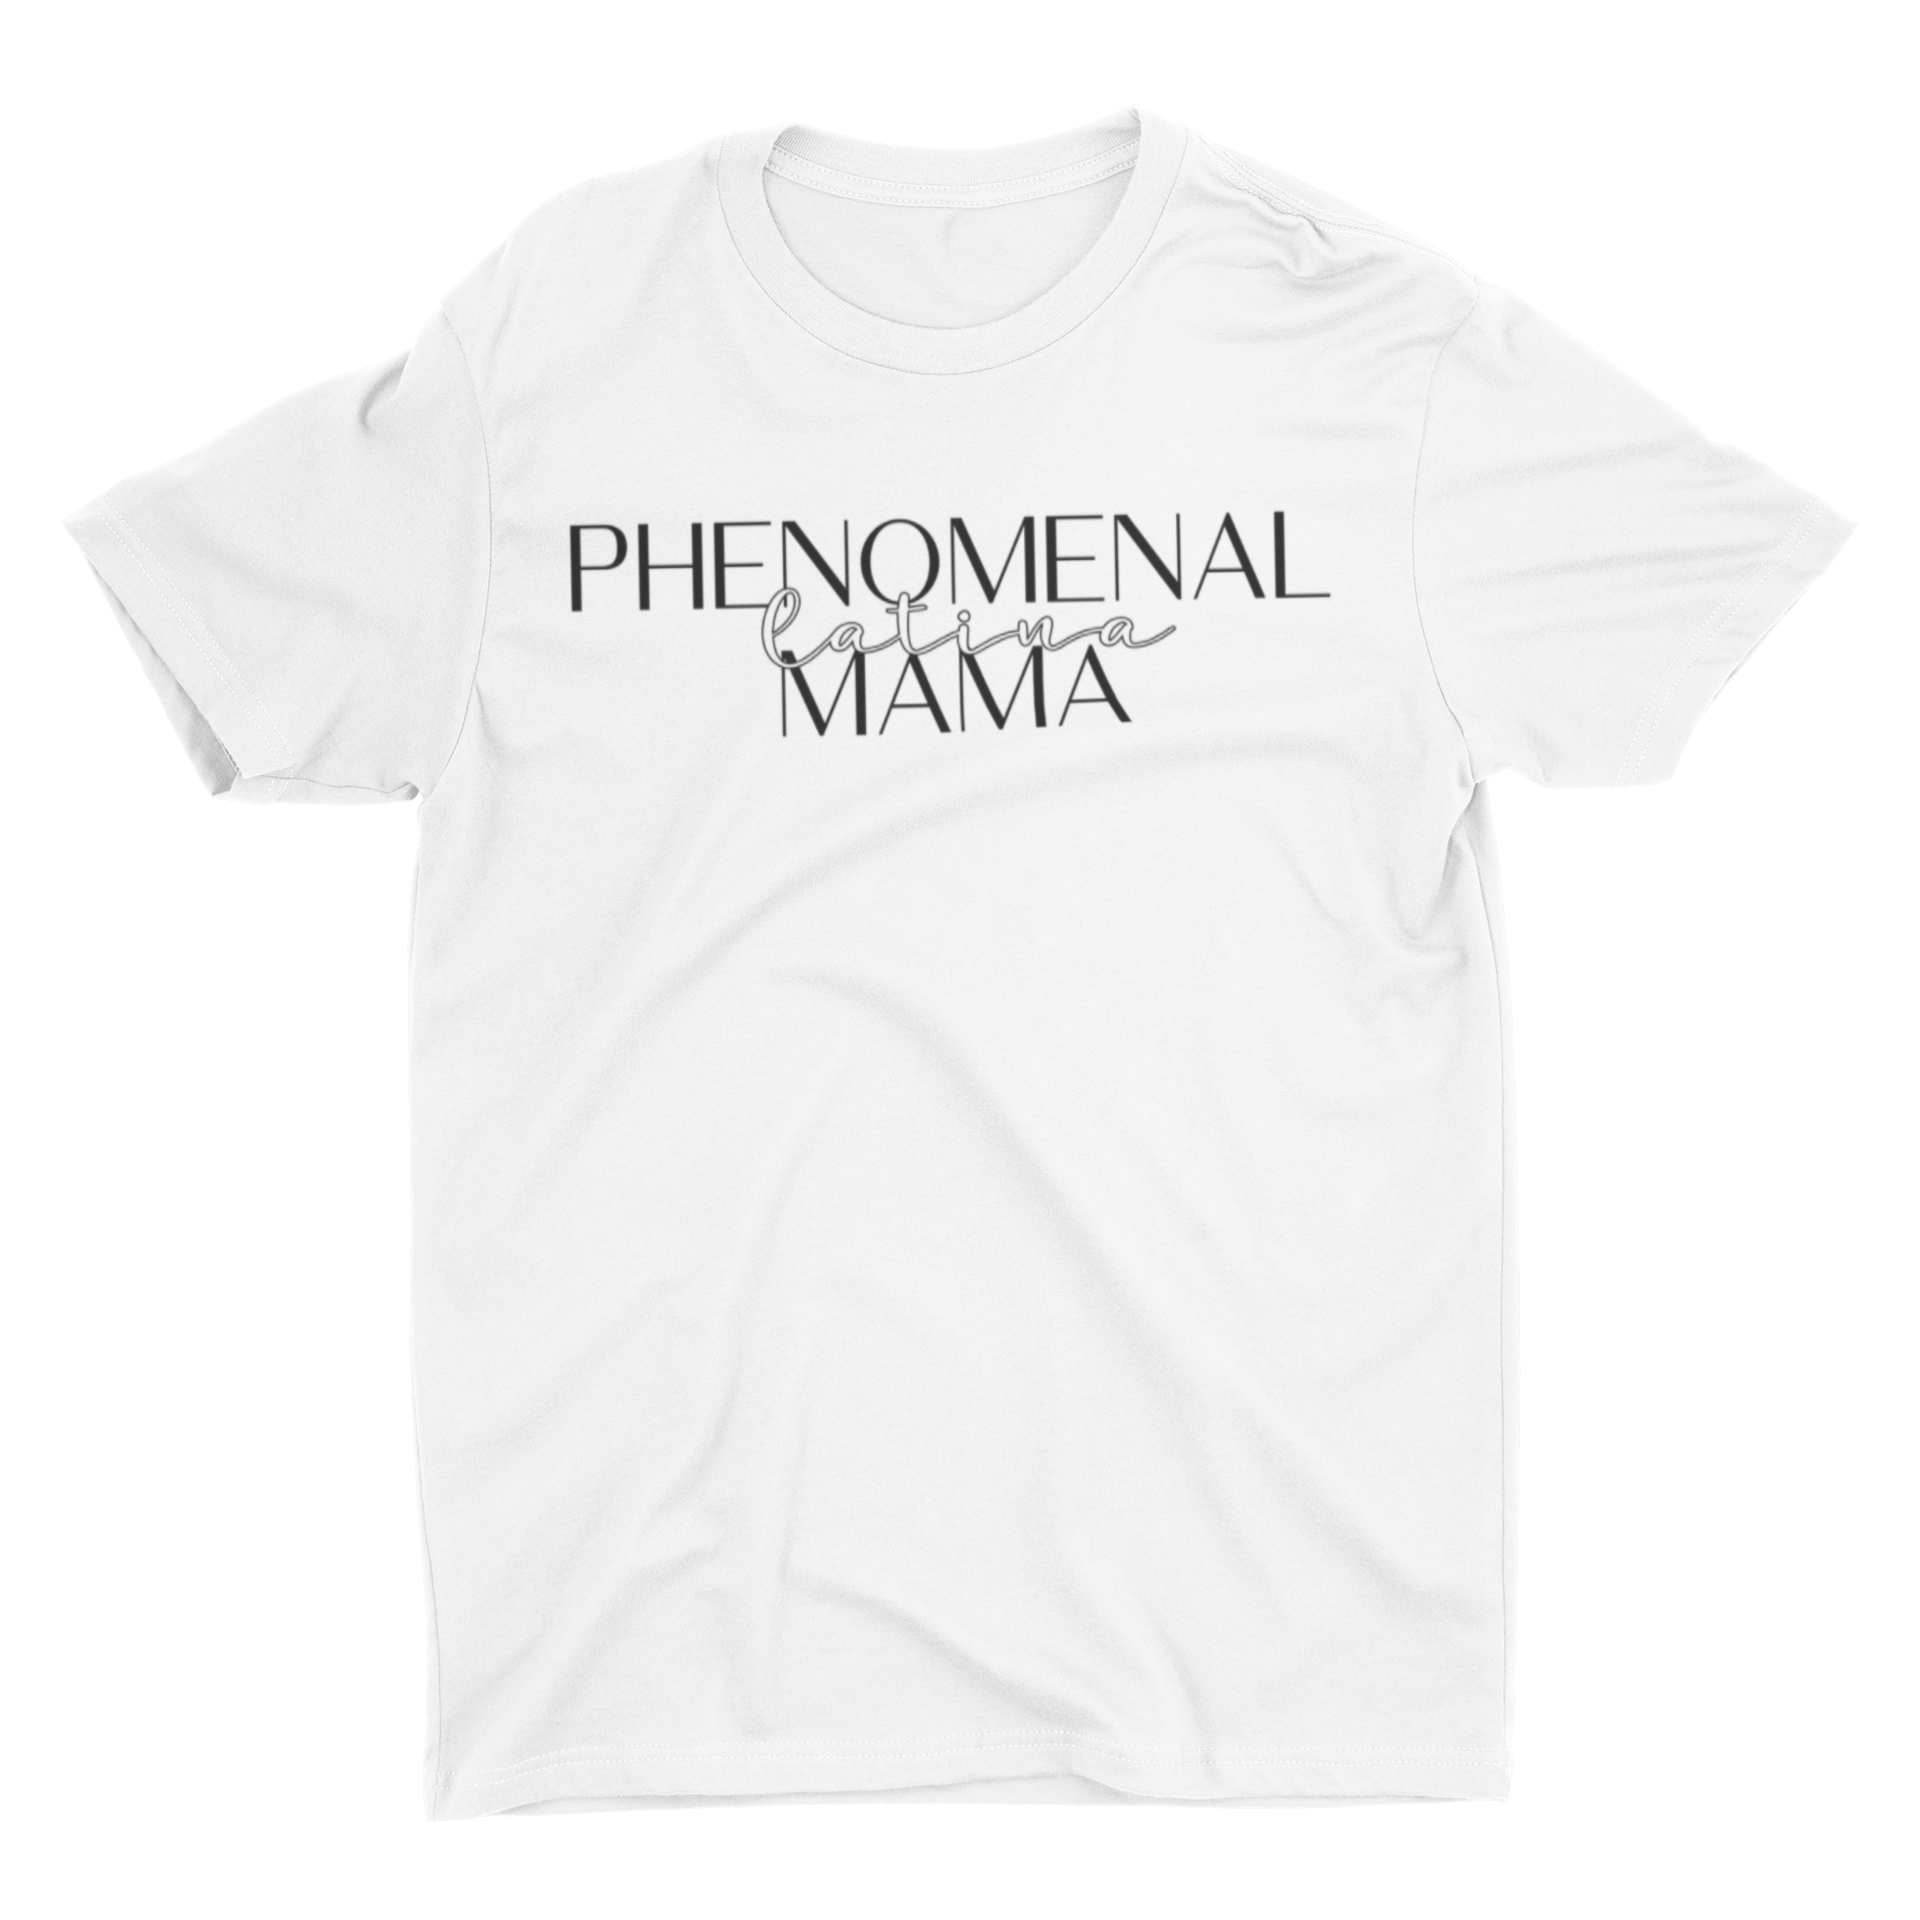 "PHENOMENAL latina MAMA" Design